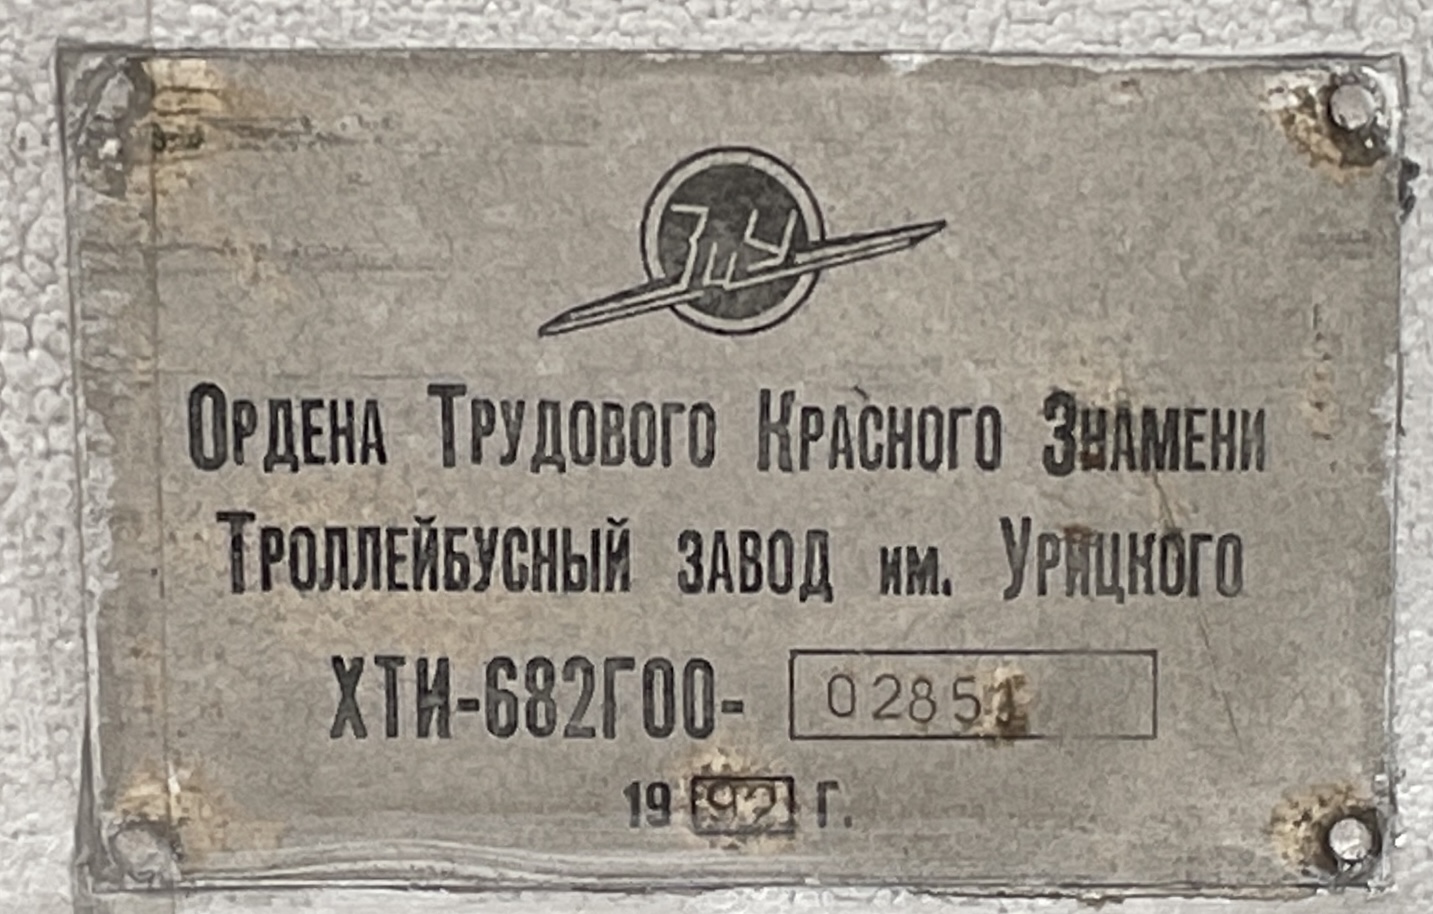 Vladimir, ZiU-682G [G00] Nr 206; Yaroslavl, ZiU-682G [G00] Nr 178